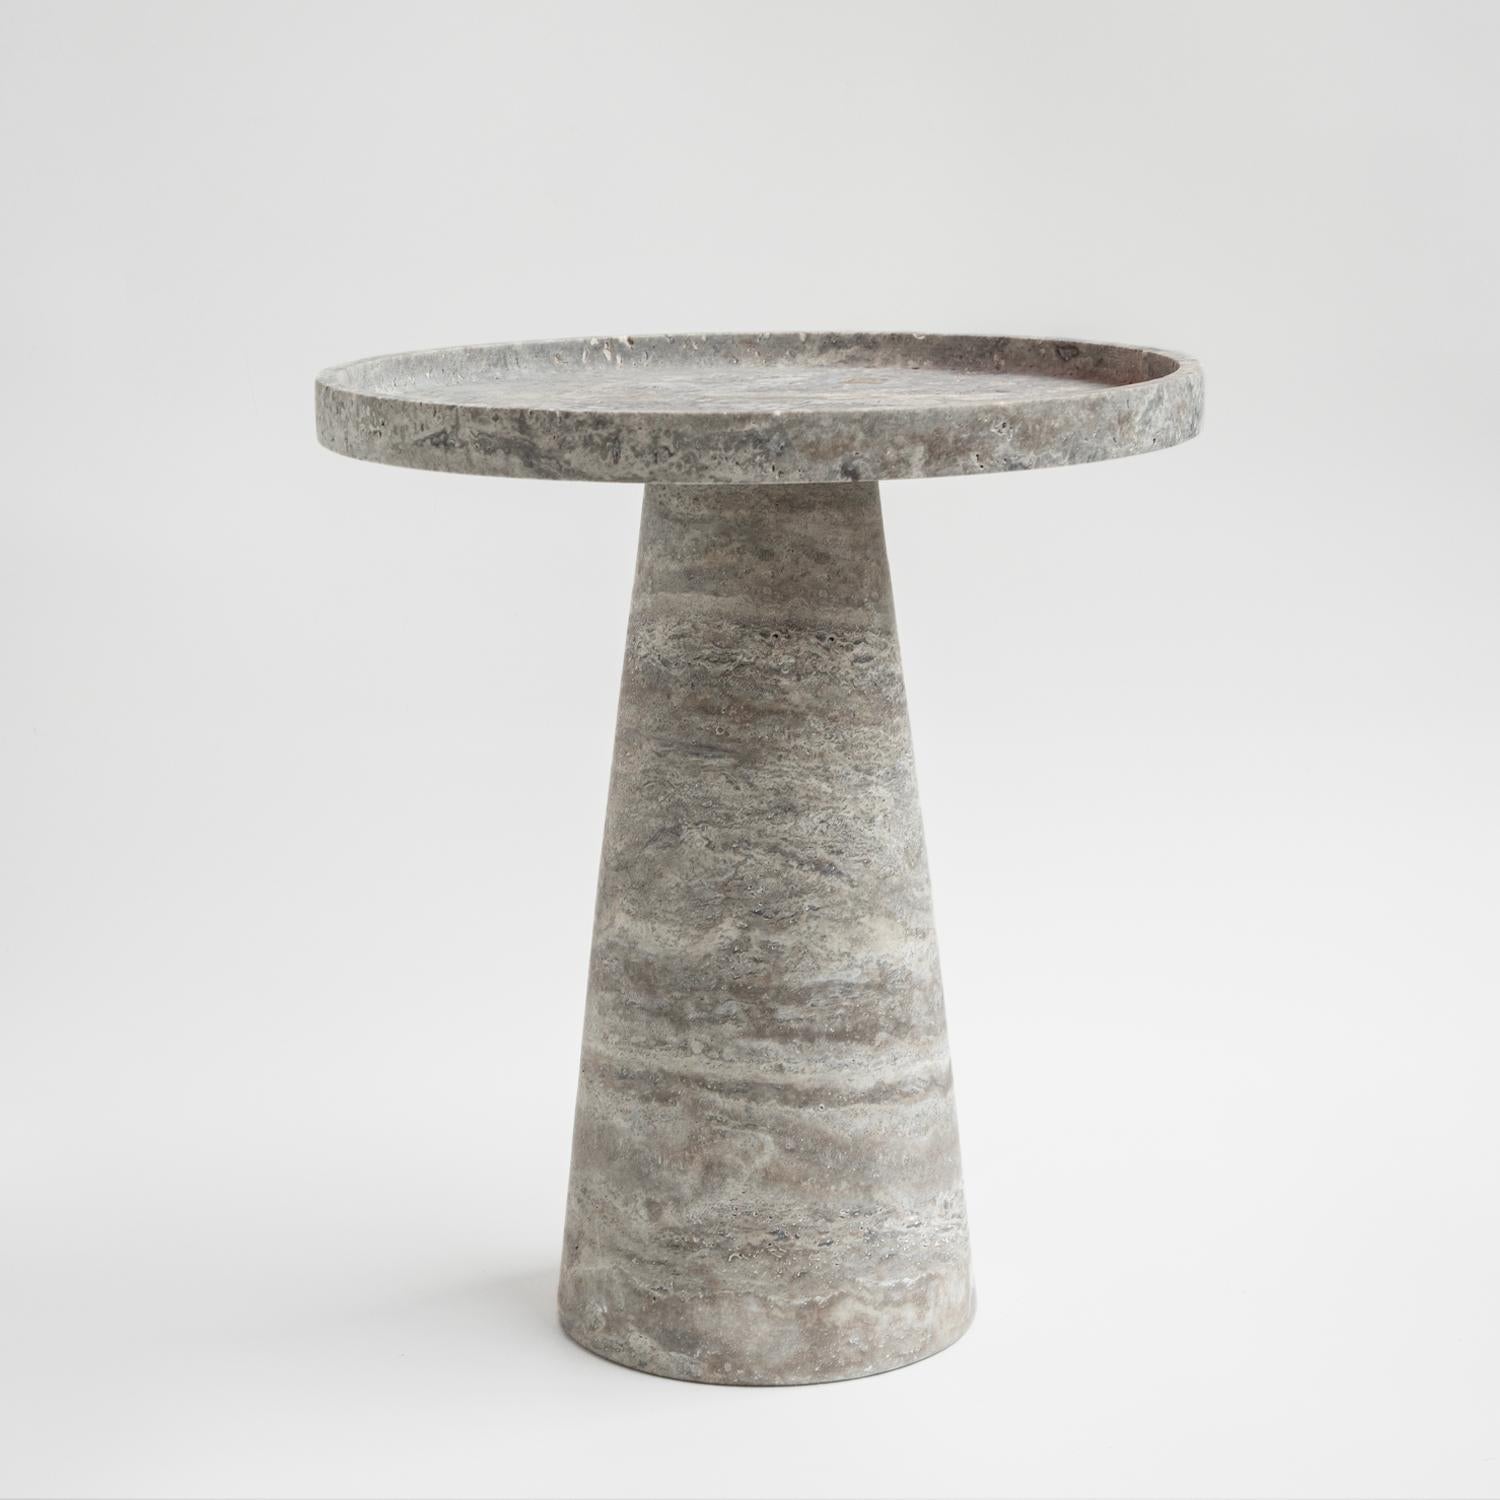 Silver Travertine Pedestal Side Table